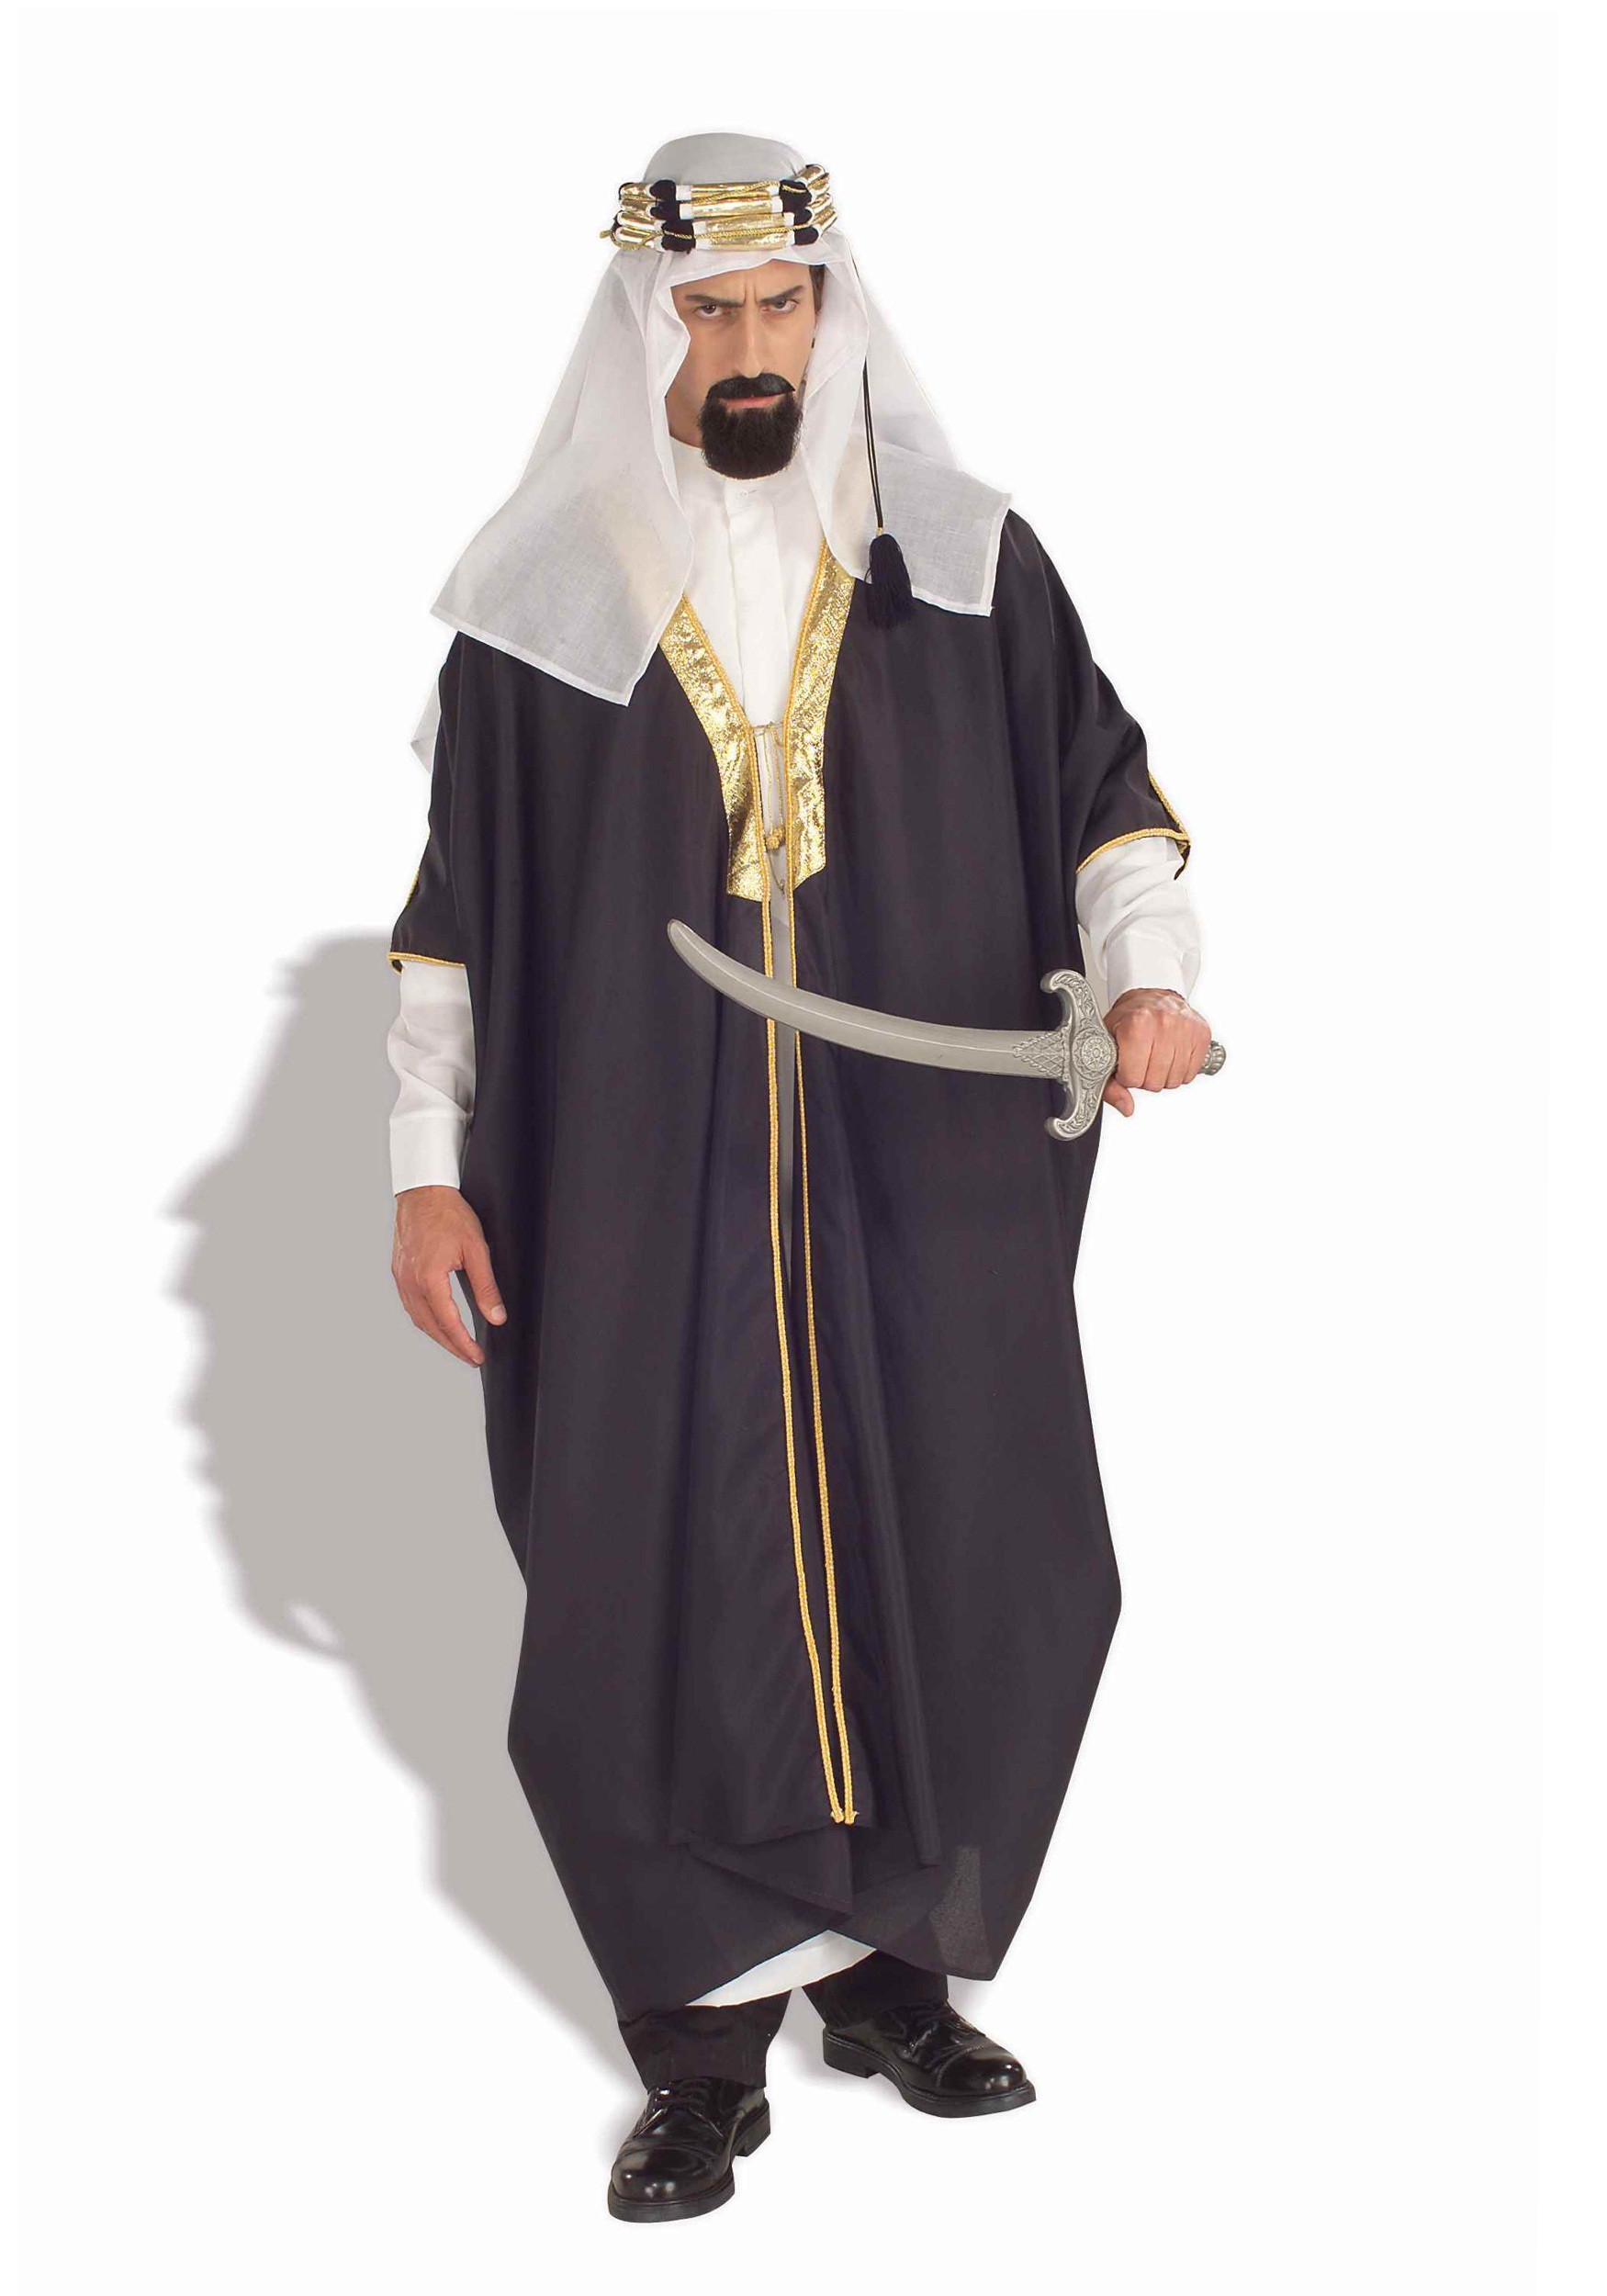 Disfraces de Árabes para hombres - DisfracesJarana